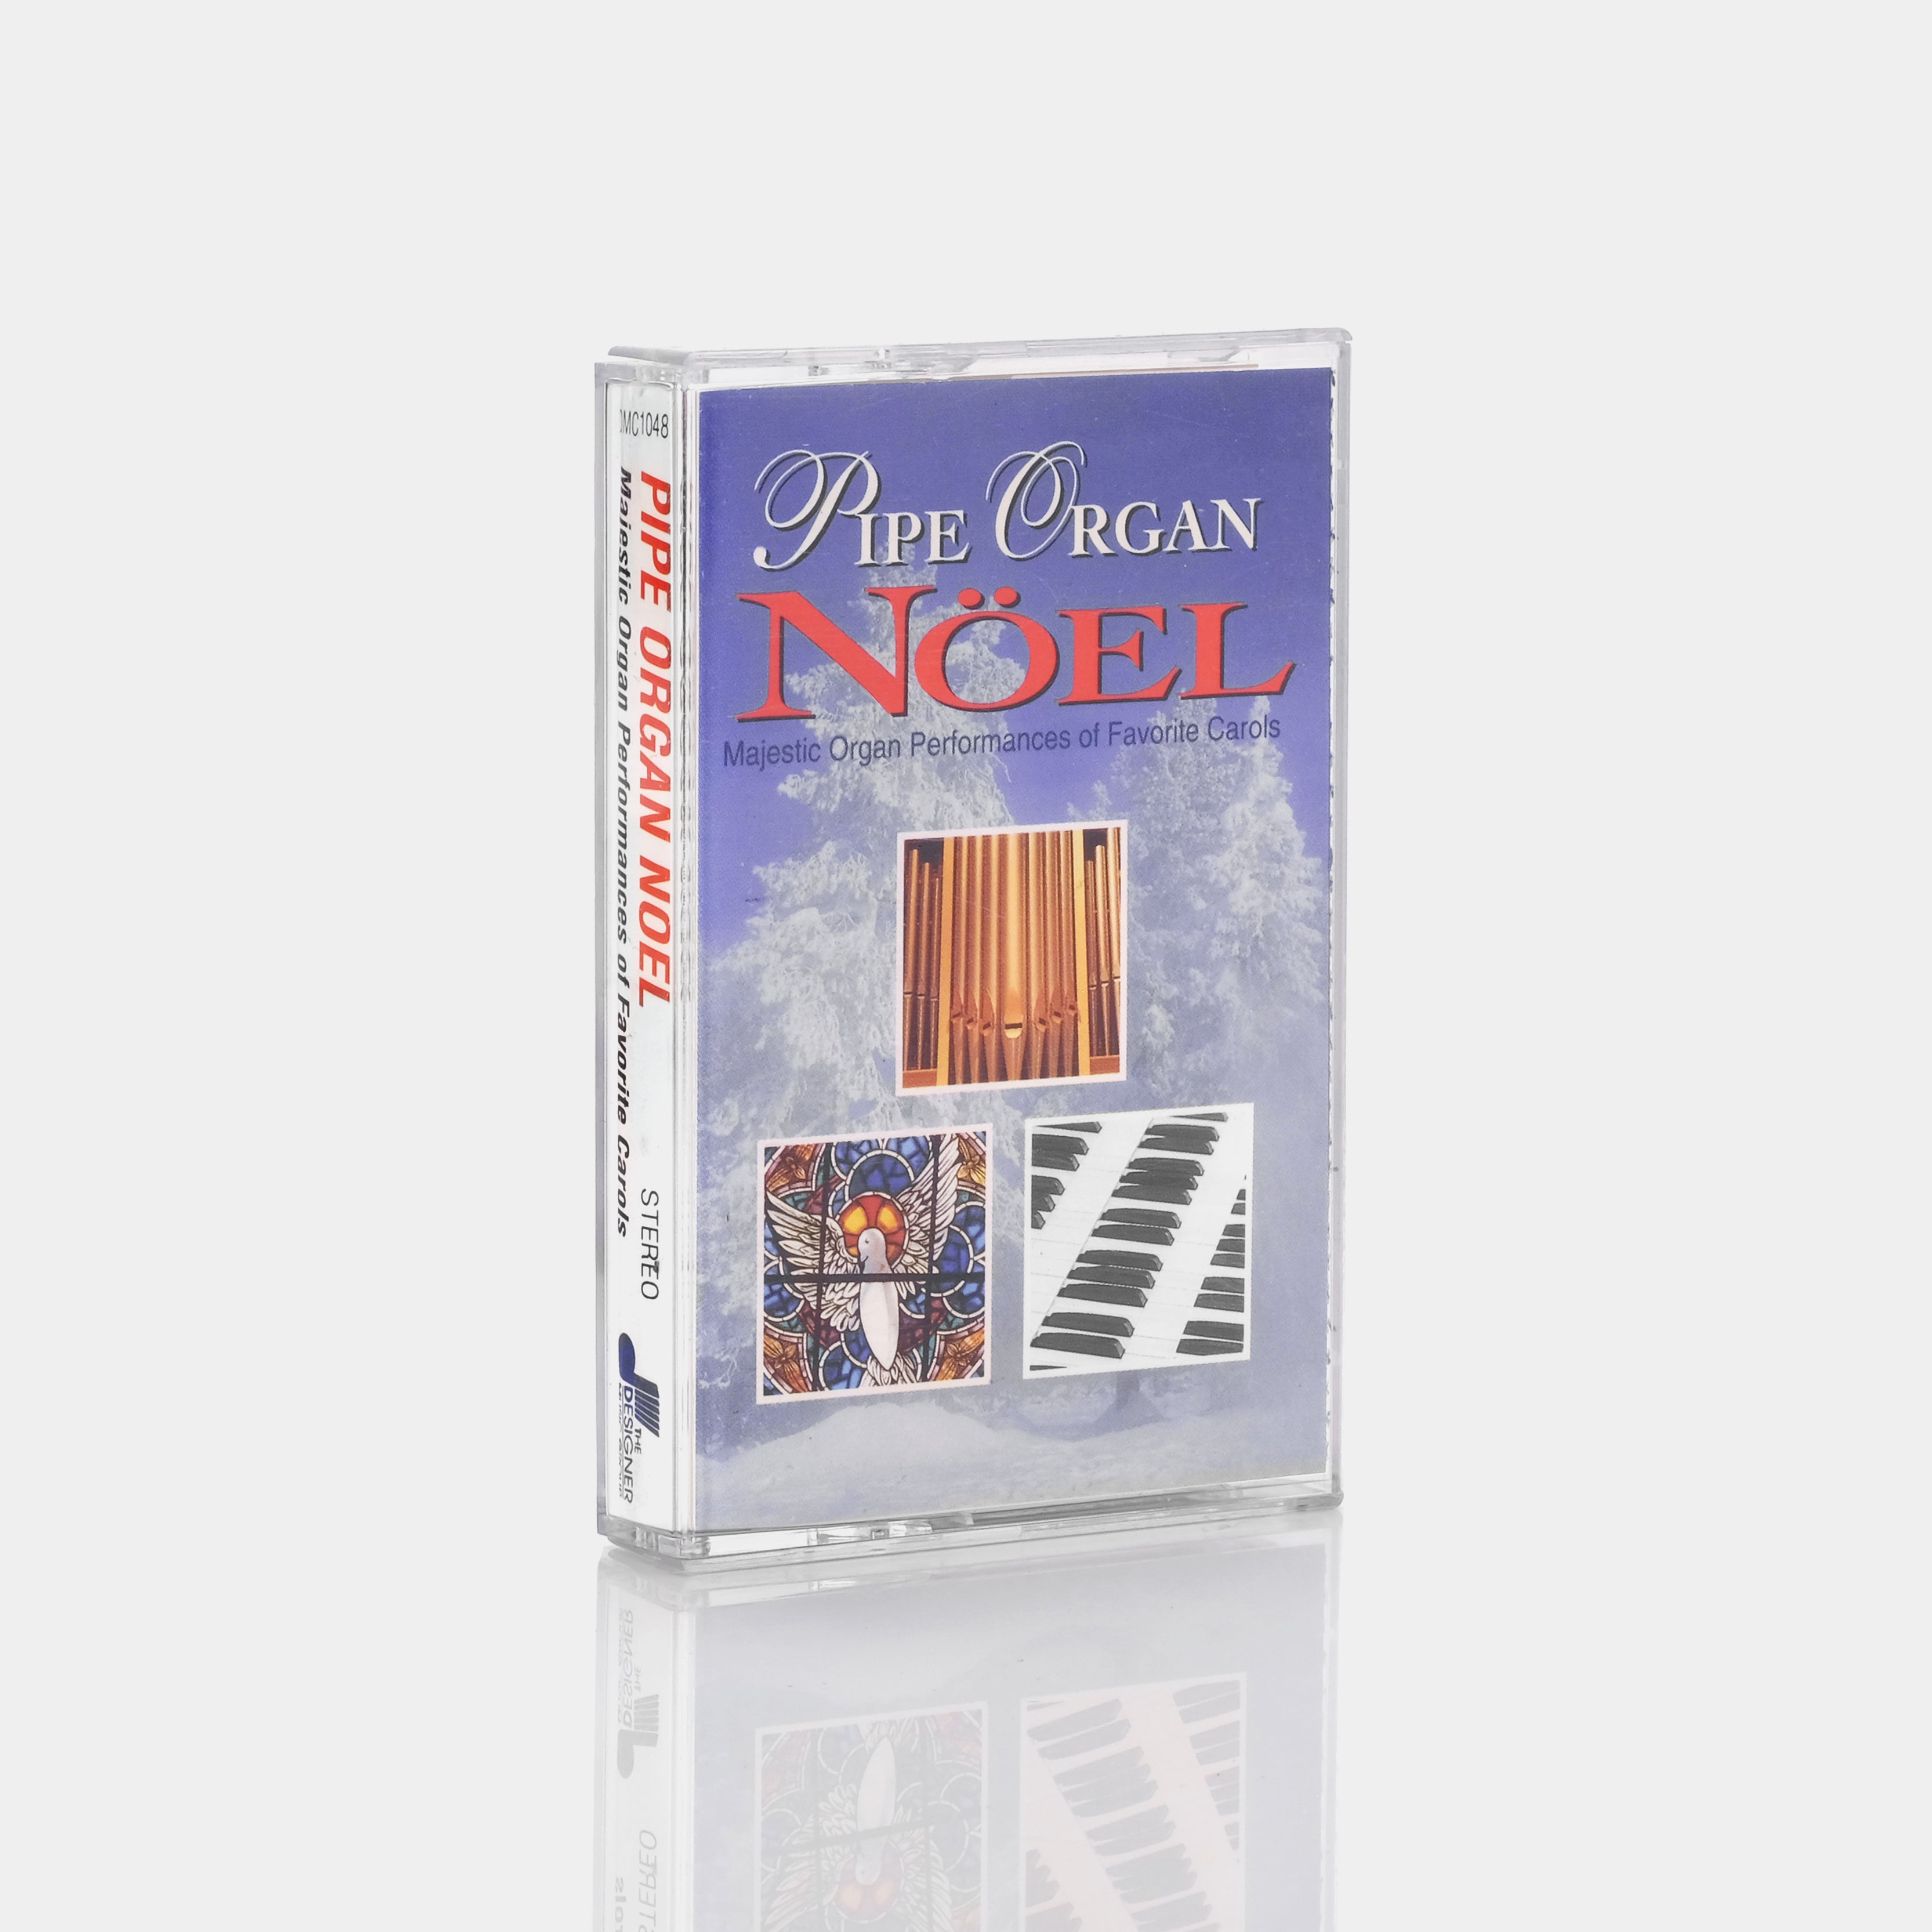 Pipe Organ Nöel - Majestic Organ Performances of Favorite Carols Cassette Tape